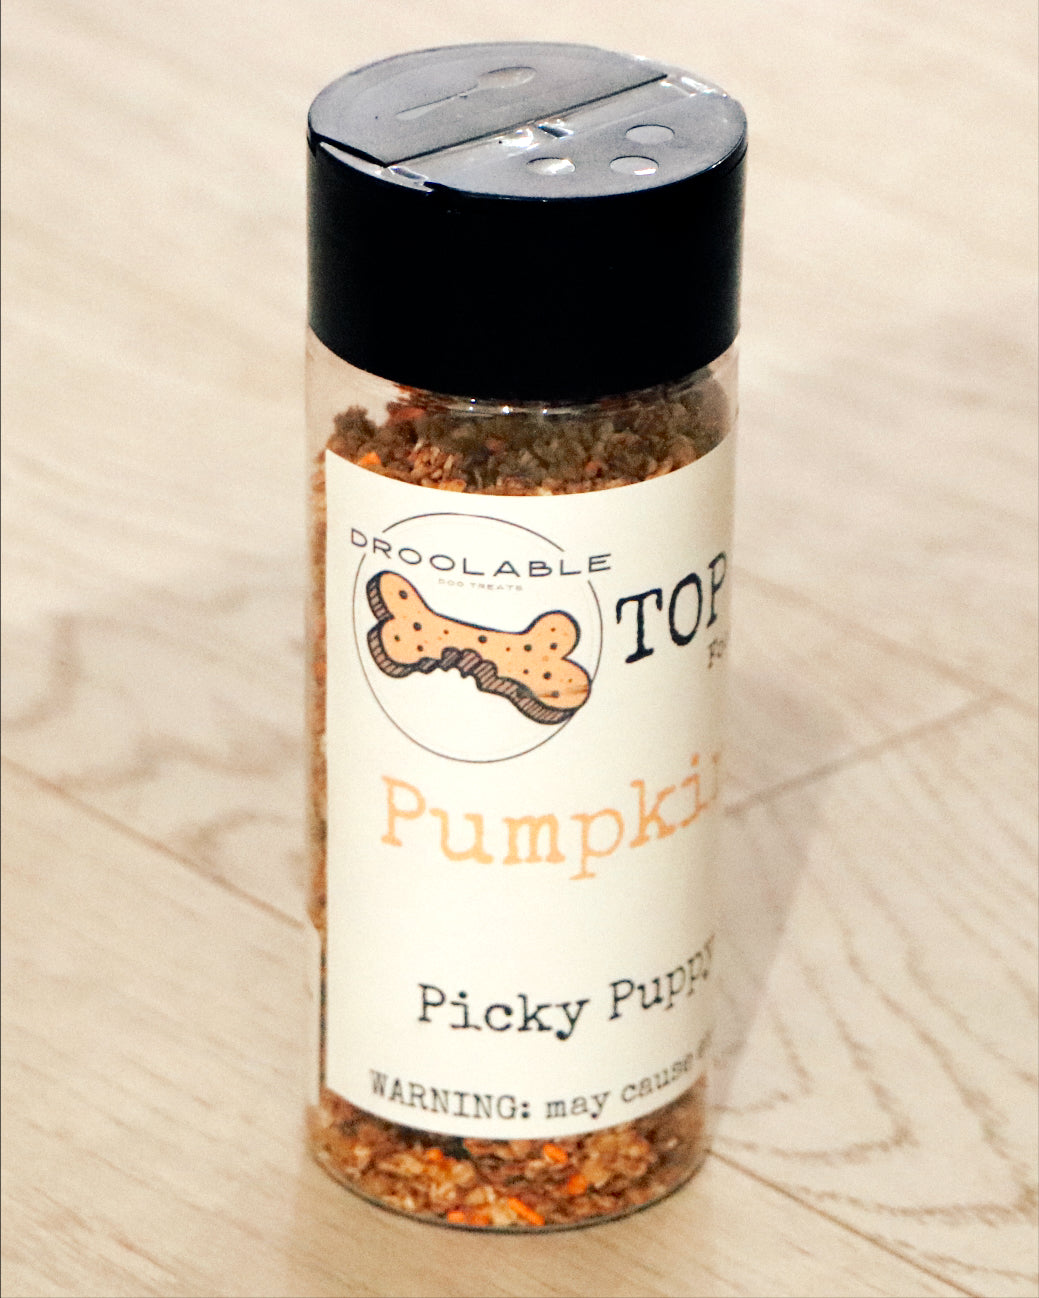 Top It Pup - Pumpkin Spice droolable